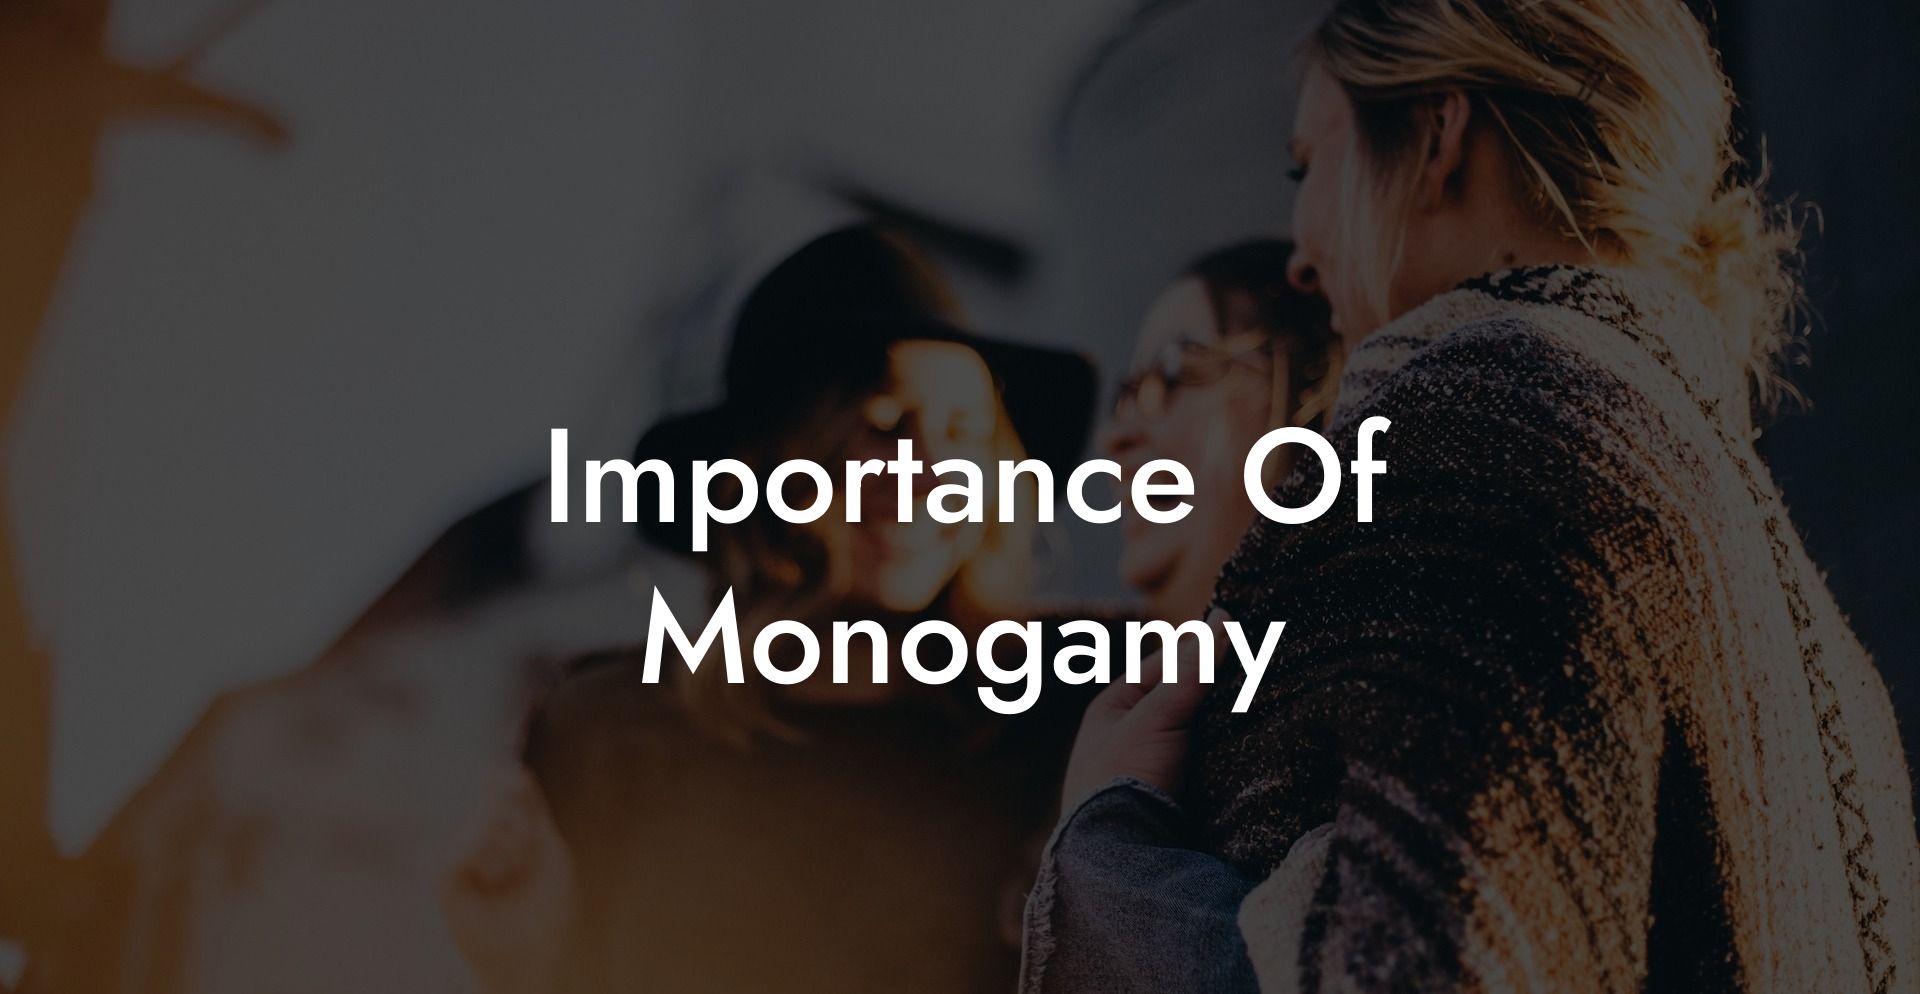 Importance Of Monogamy